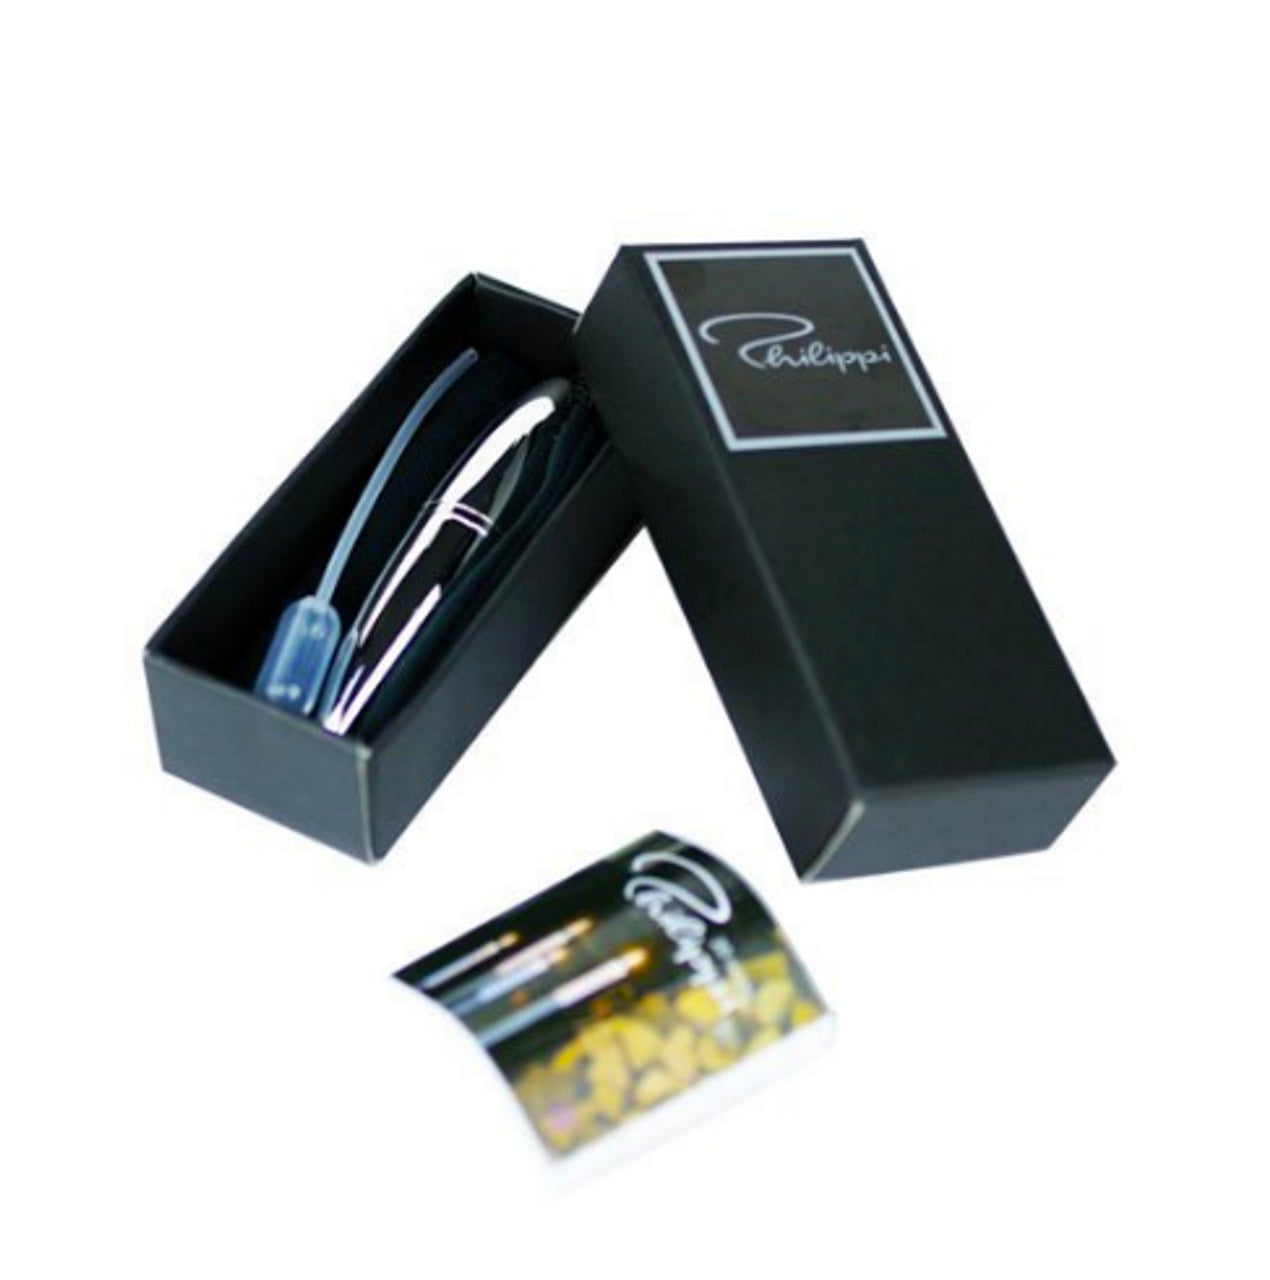 Ellipse perfume atomizer box at Indigo